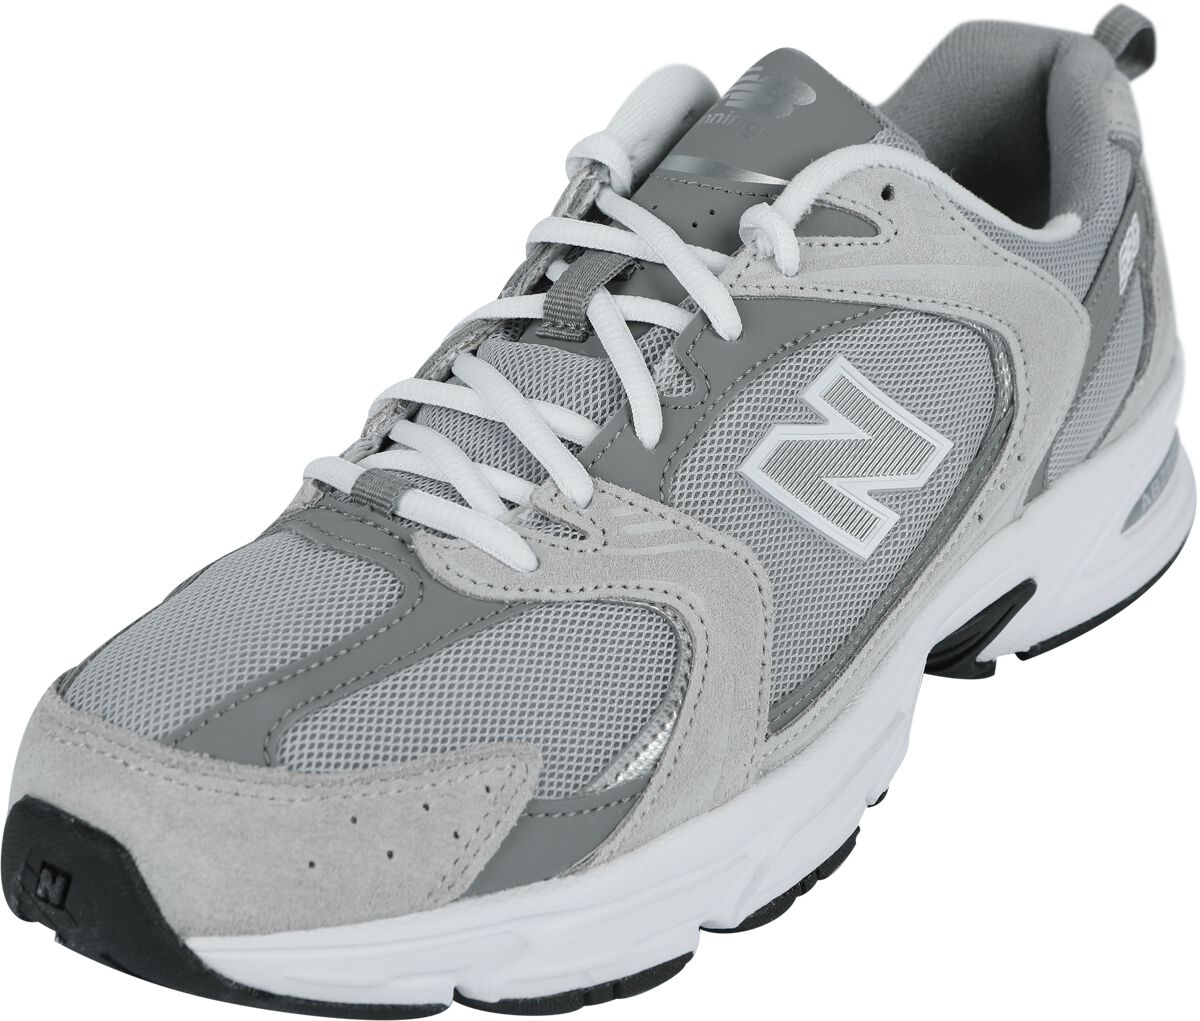 New Balance 530 Sneaker grau in EU41,5